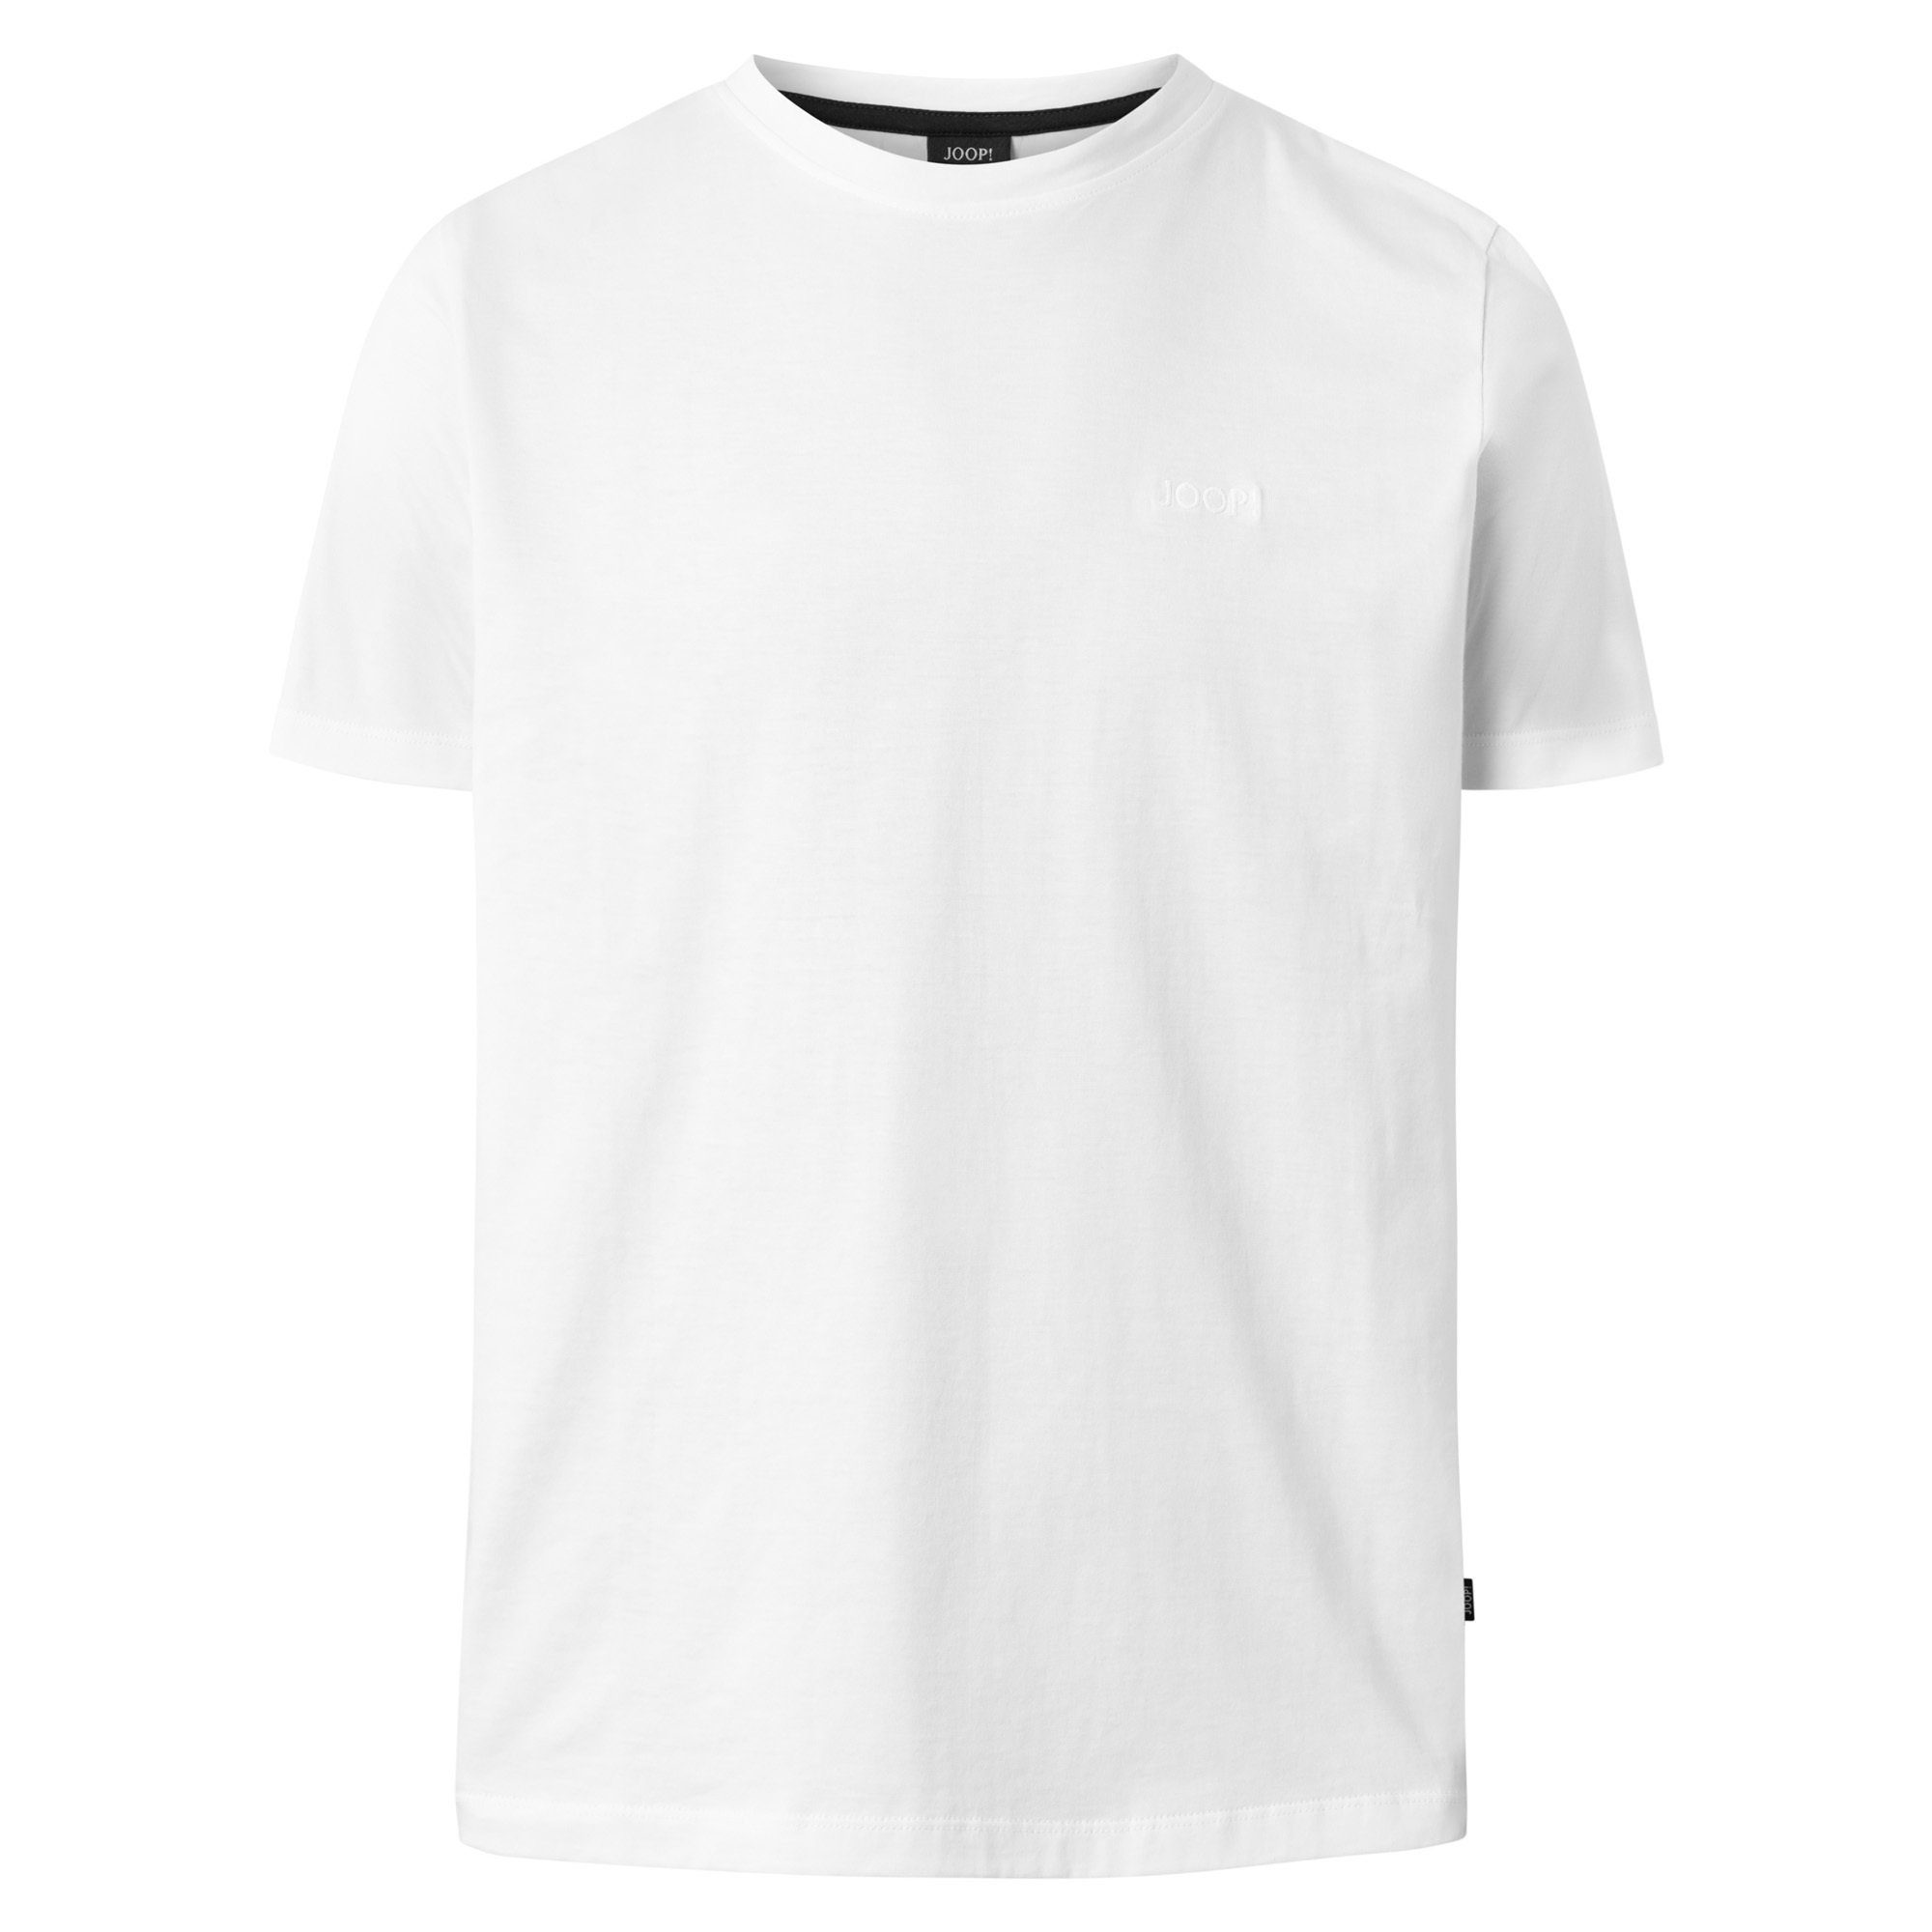 Joop! - Rundhals, Cosimo, Herren Weiß T-Shirt T-Shirt Halbarm